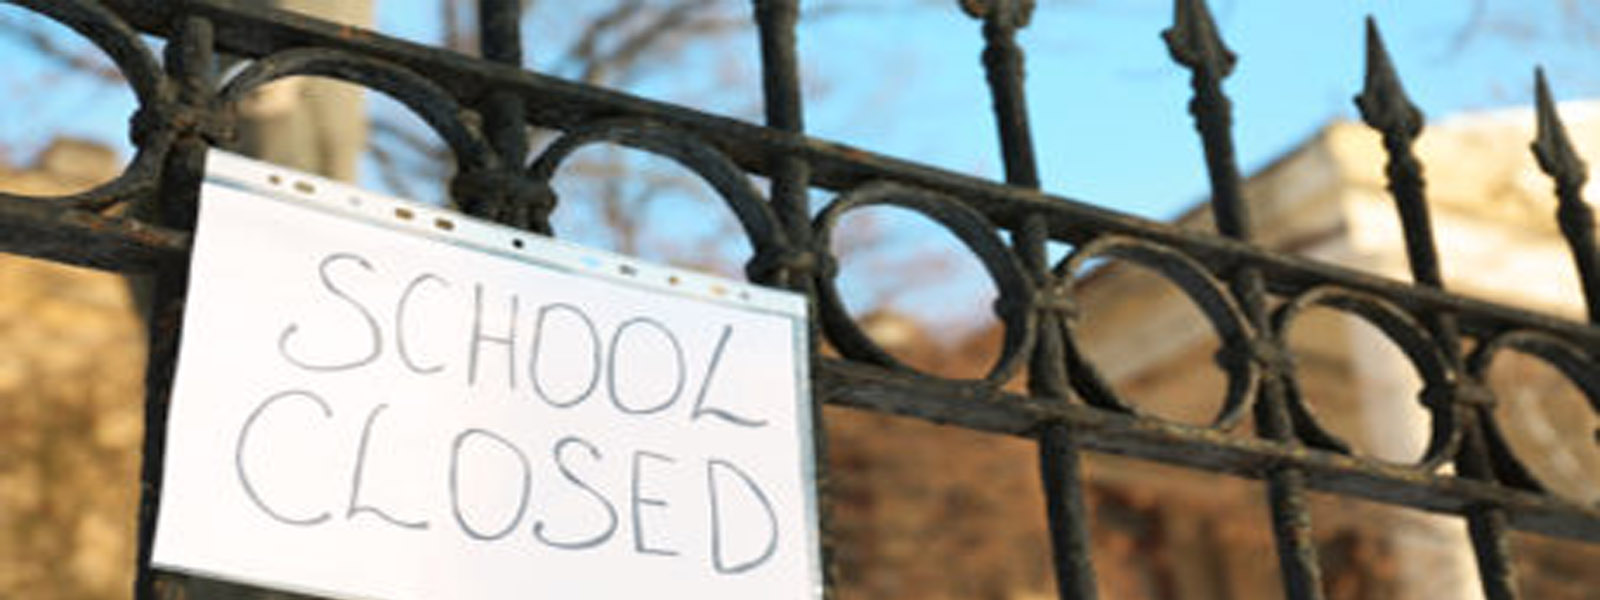 Catholic schools closed from tomorrow  